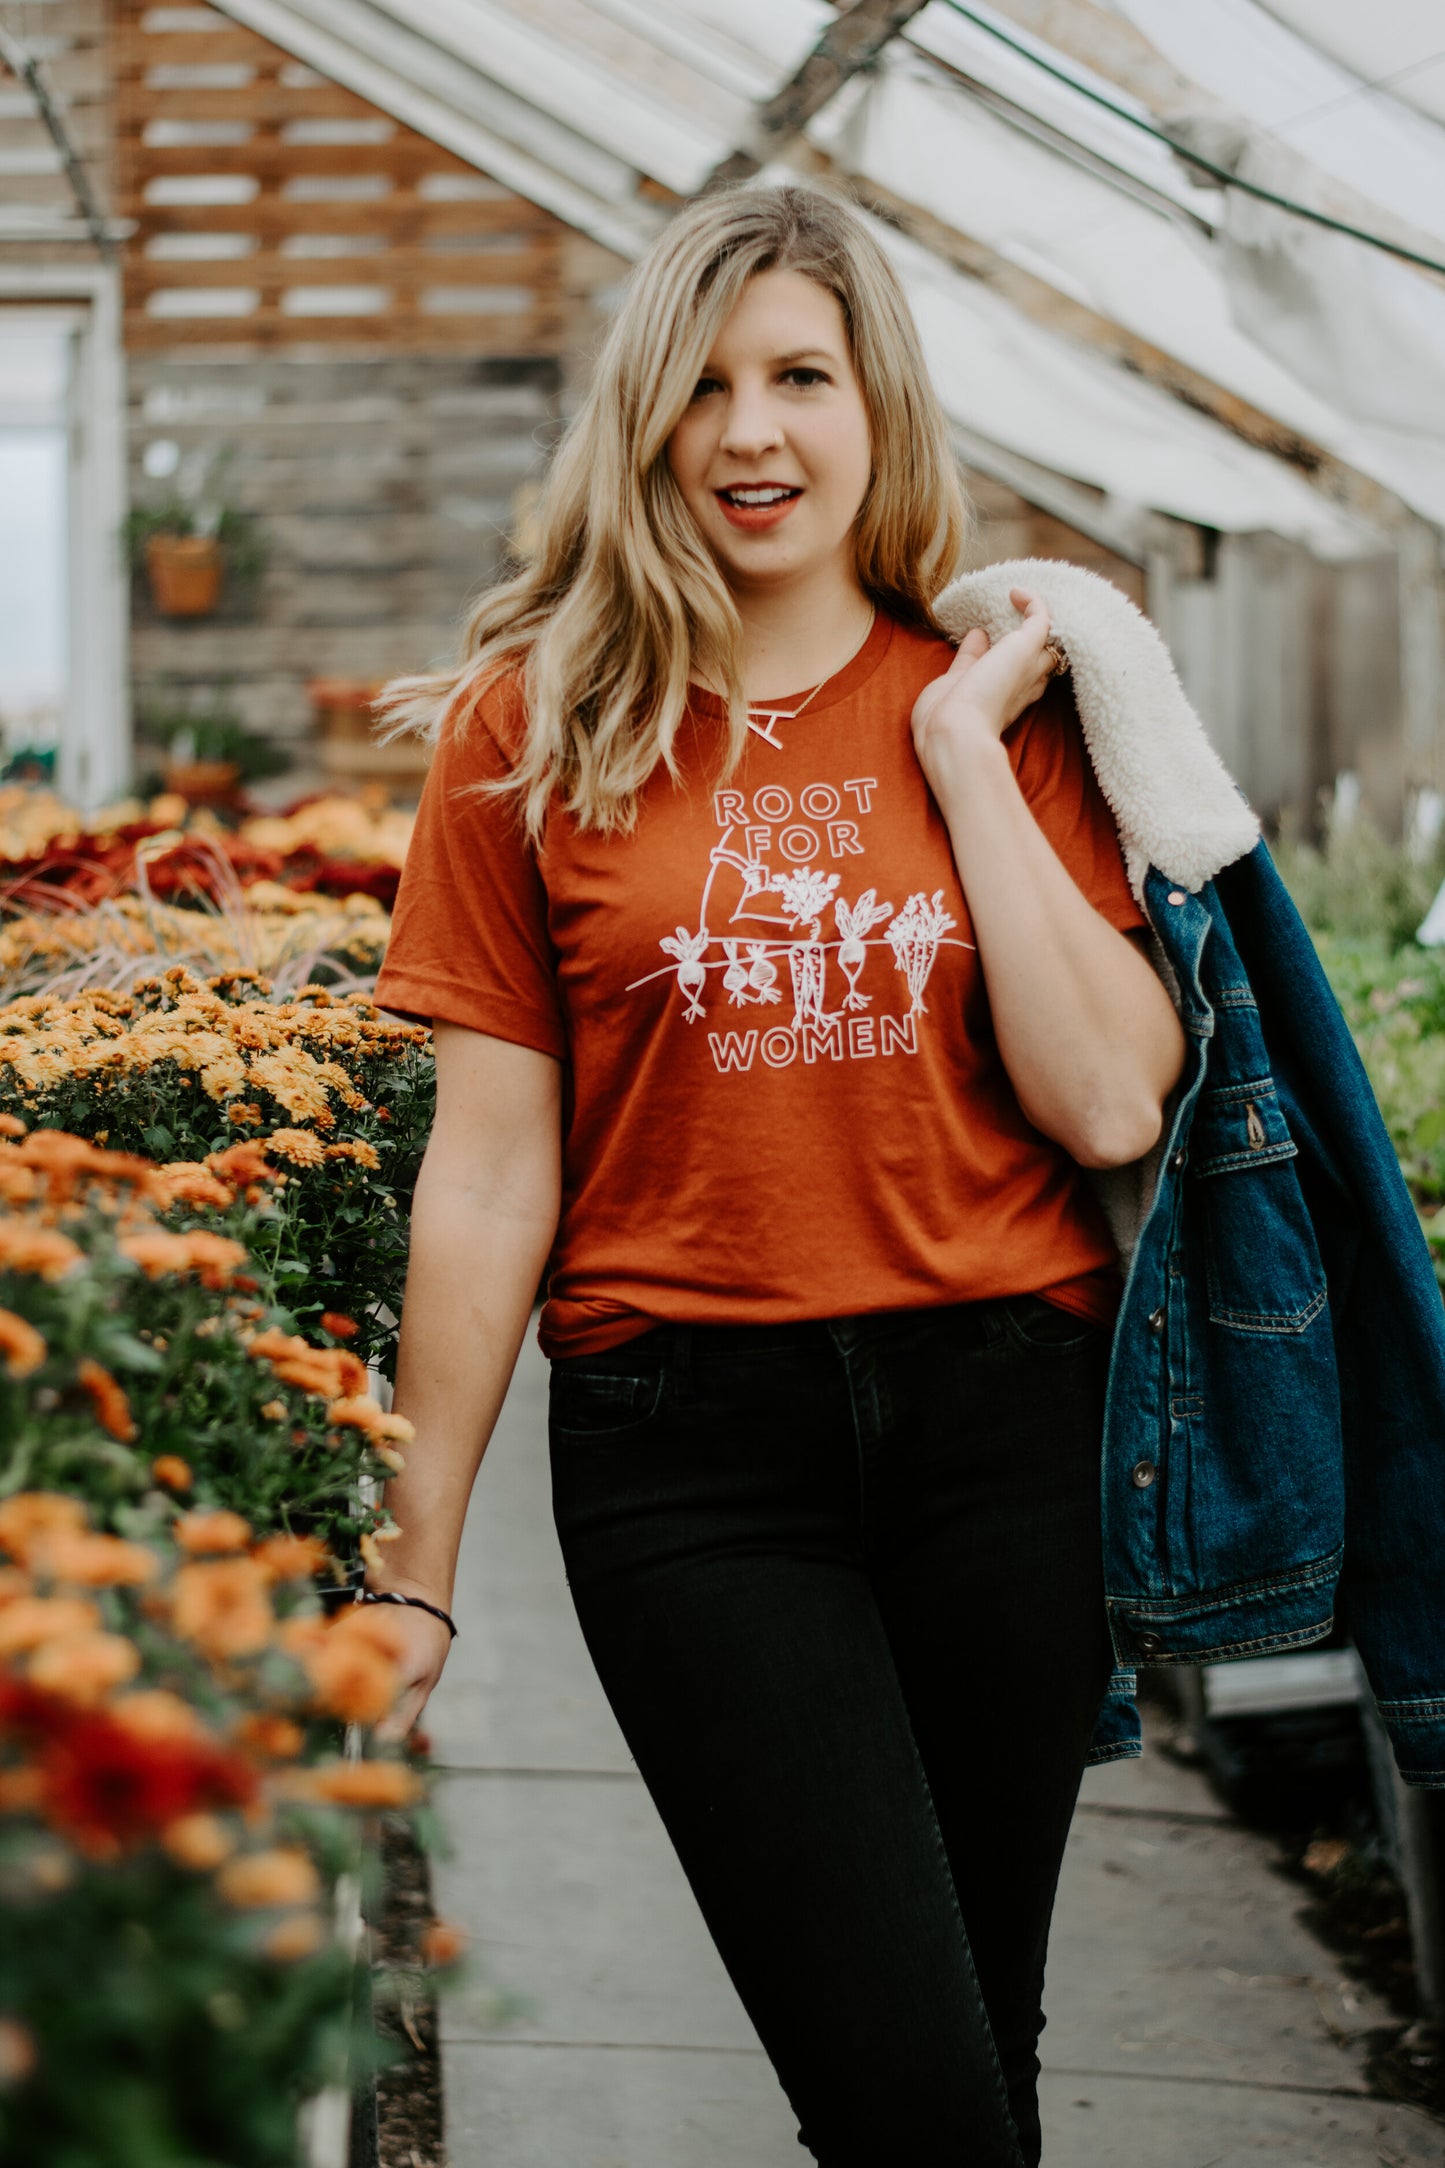 A woman wears a Root for Women t-shirt in a garden shop